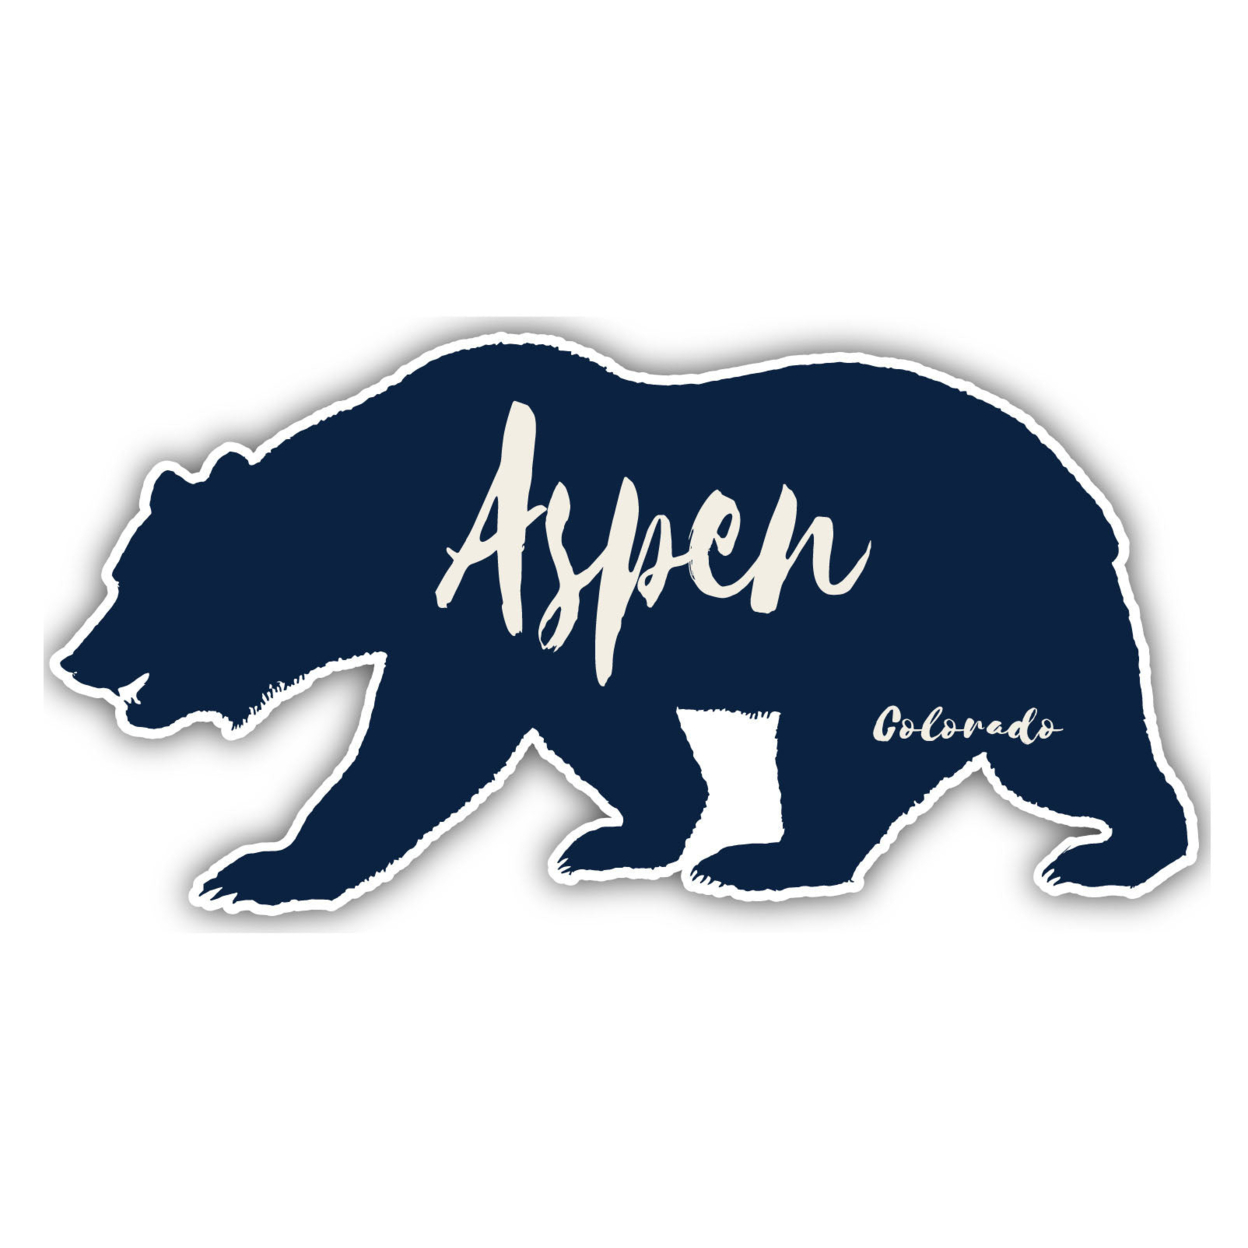 Aspen Colorado Souvenir Decorative Stickers (Choose Theme And Size) - Single Unit, 4-Inch, Great Outdoors